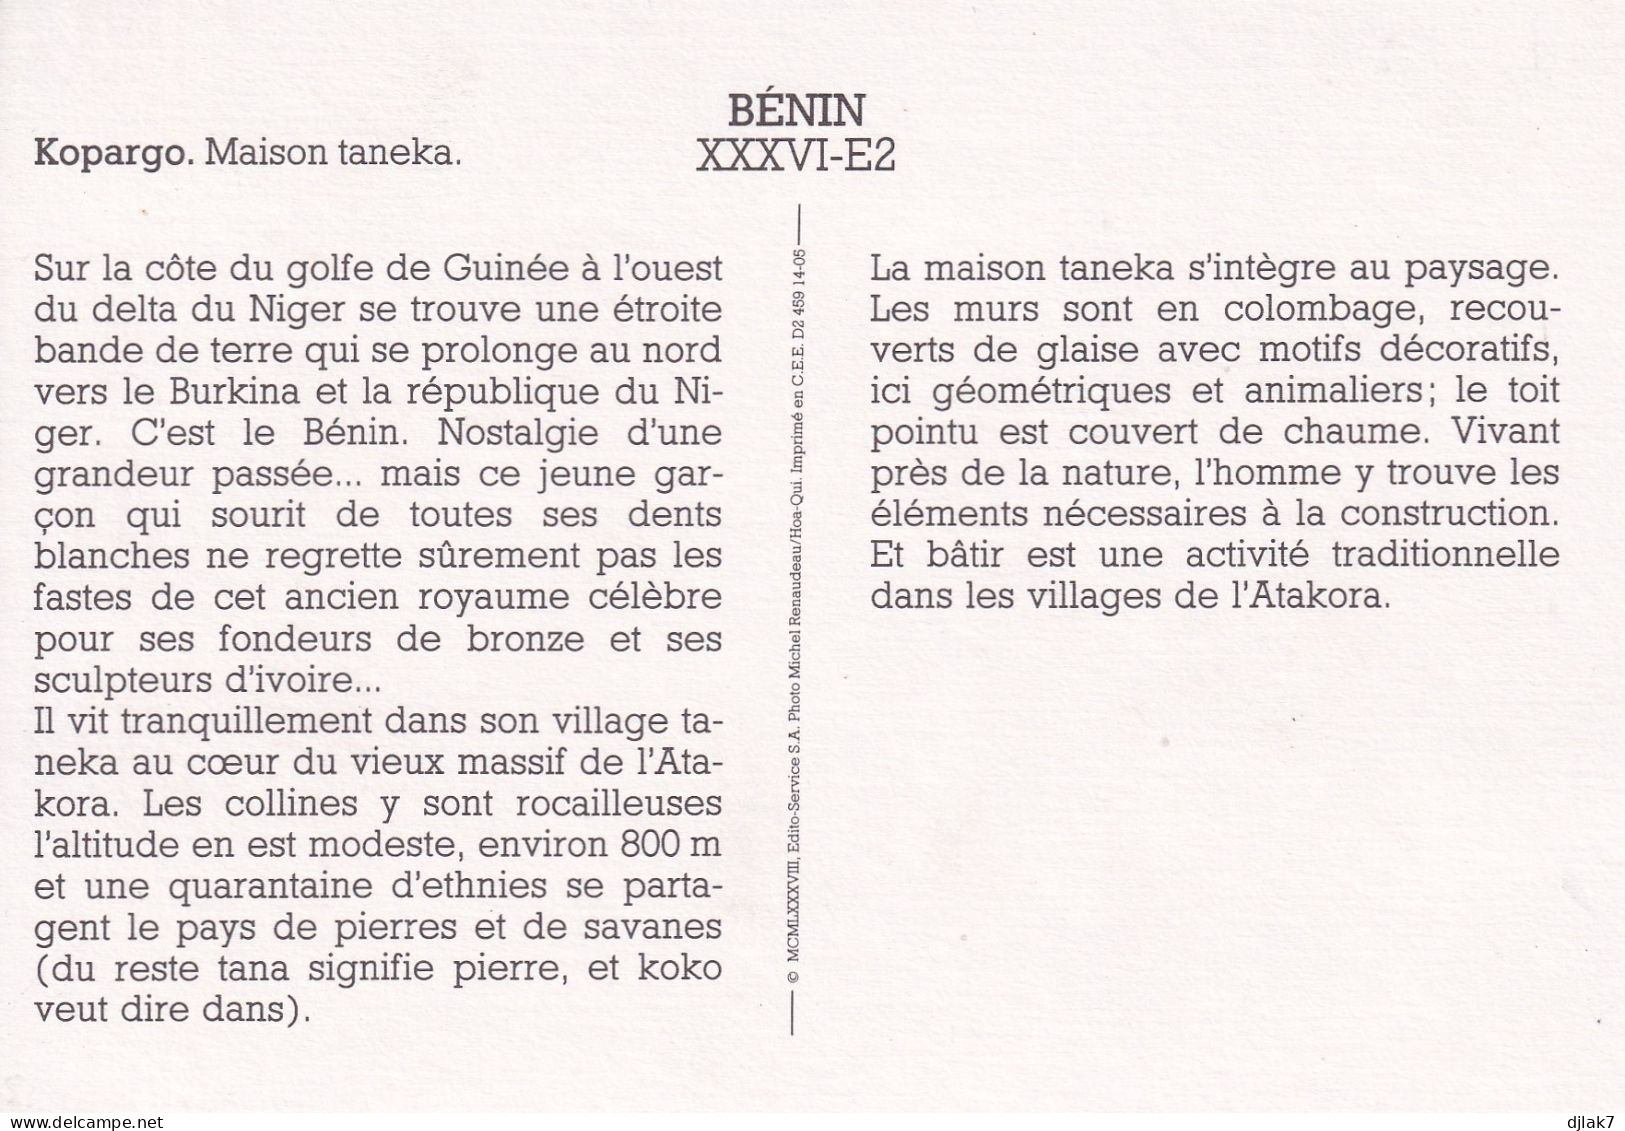 Benin Kopargo Maison Taneka - Benin